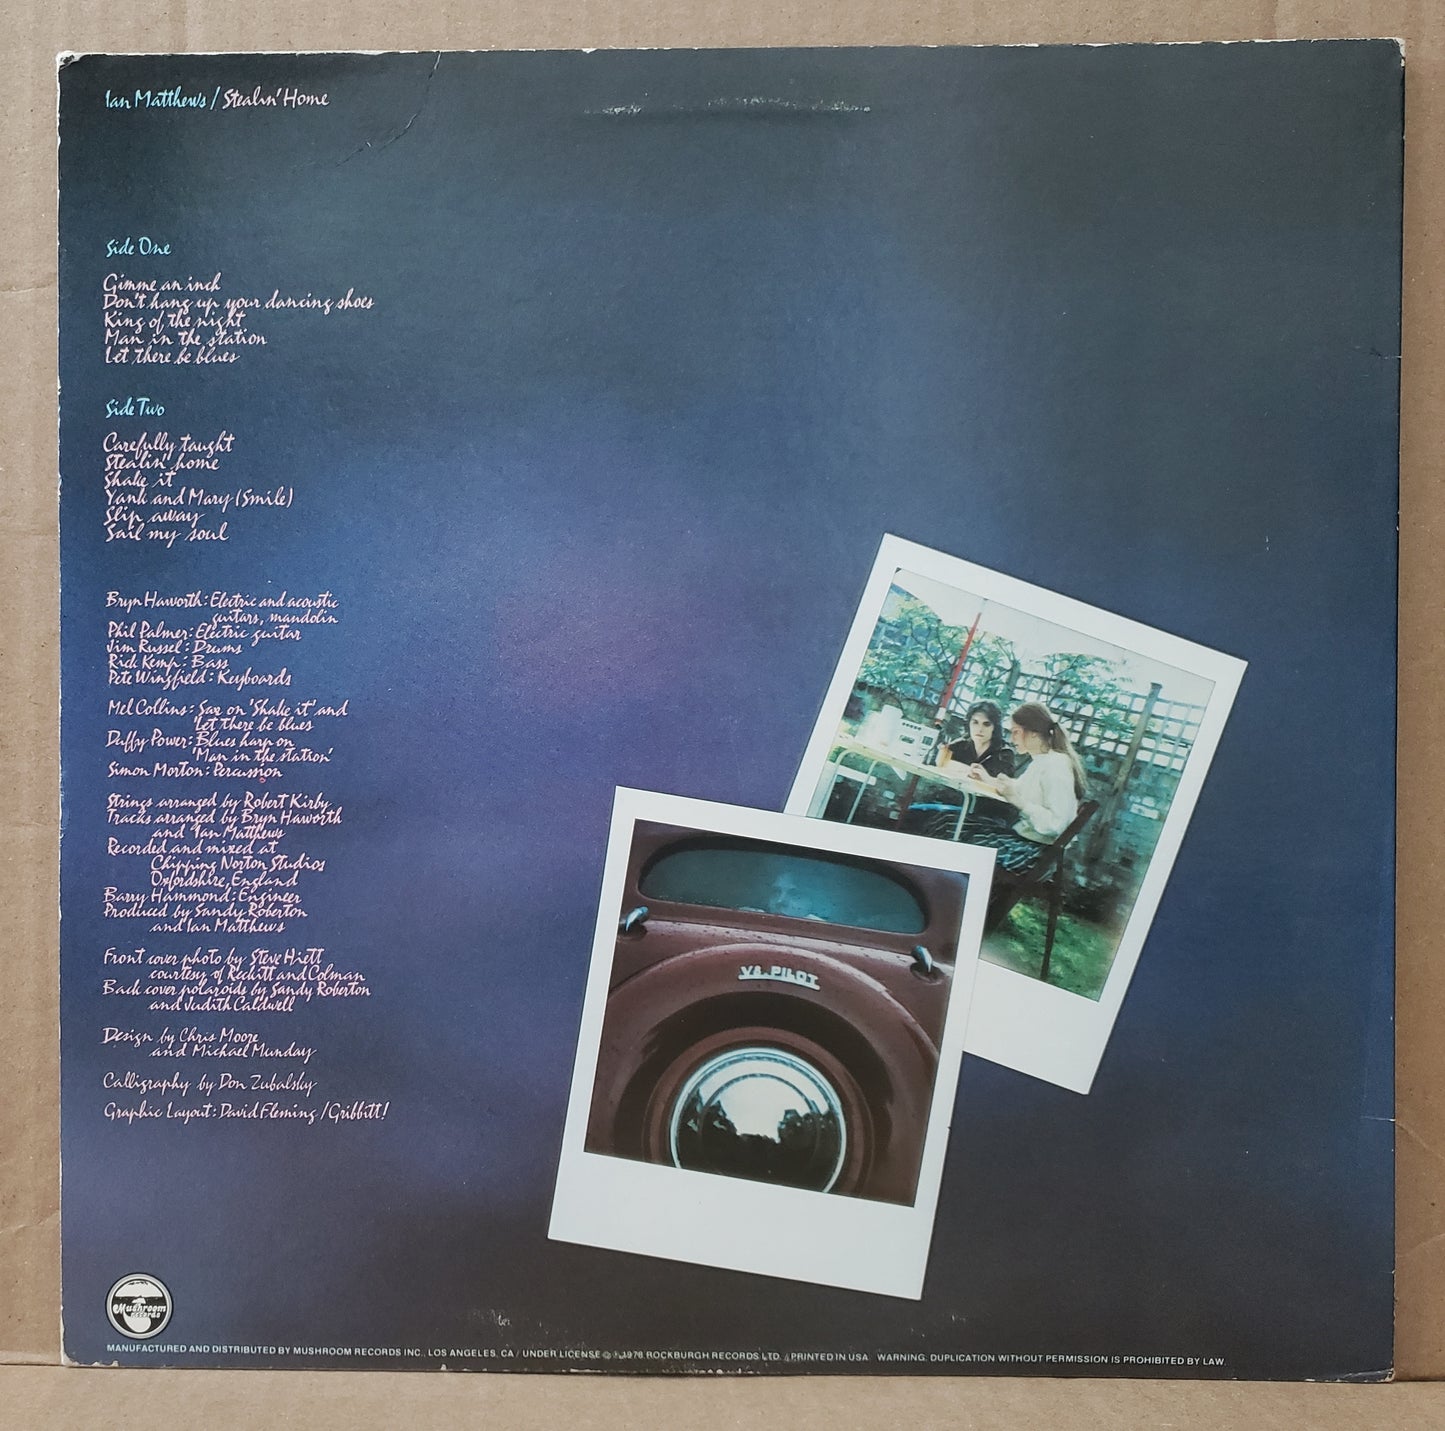 Ian Matthews - Stealin' Home [1978 Compton Pressing] [Used Vinyl Record LP]